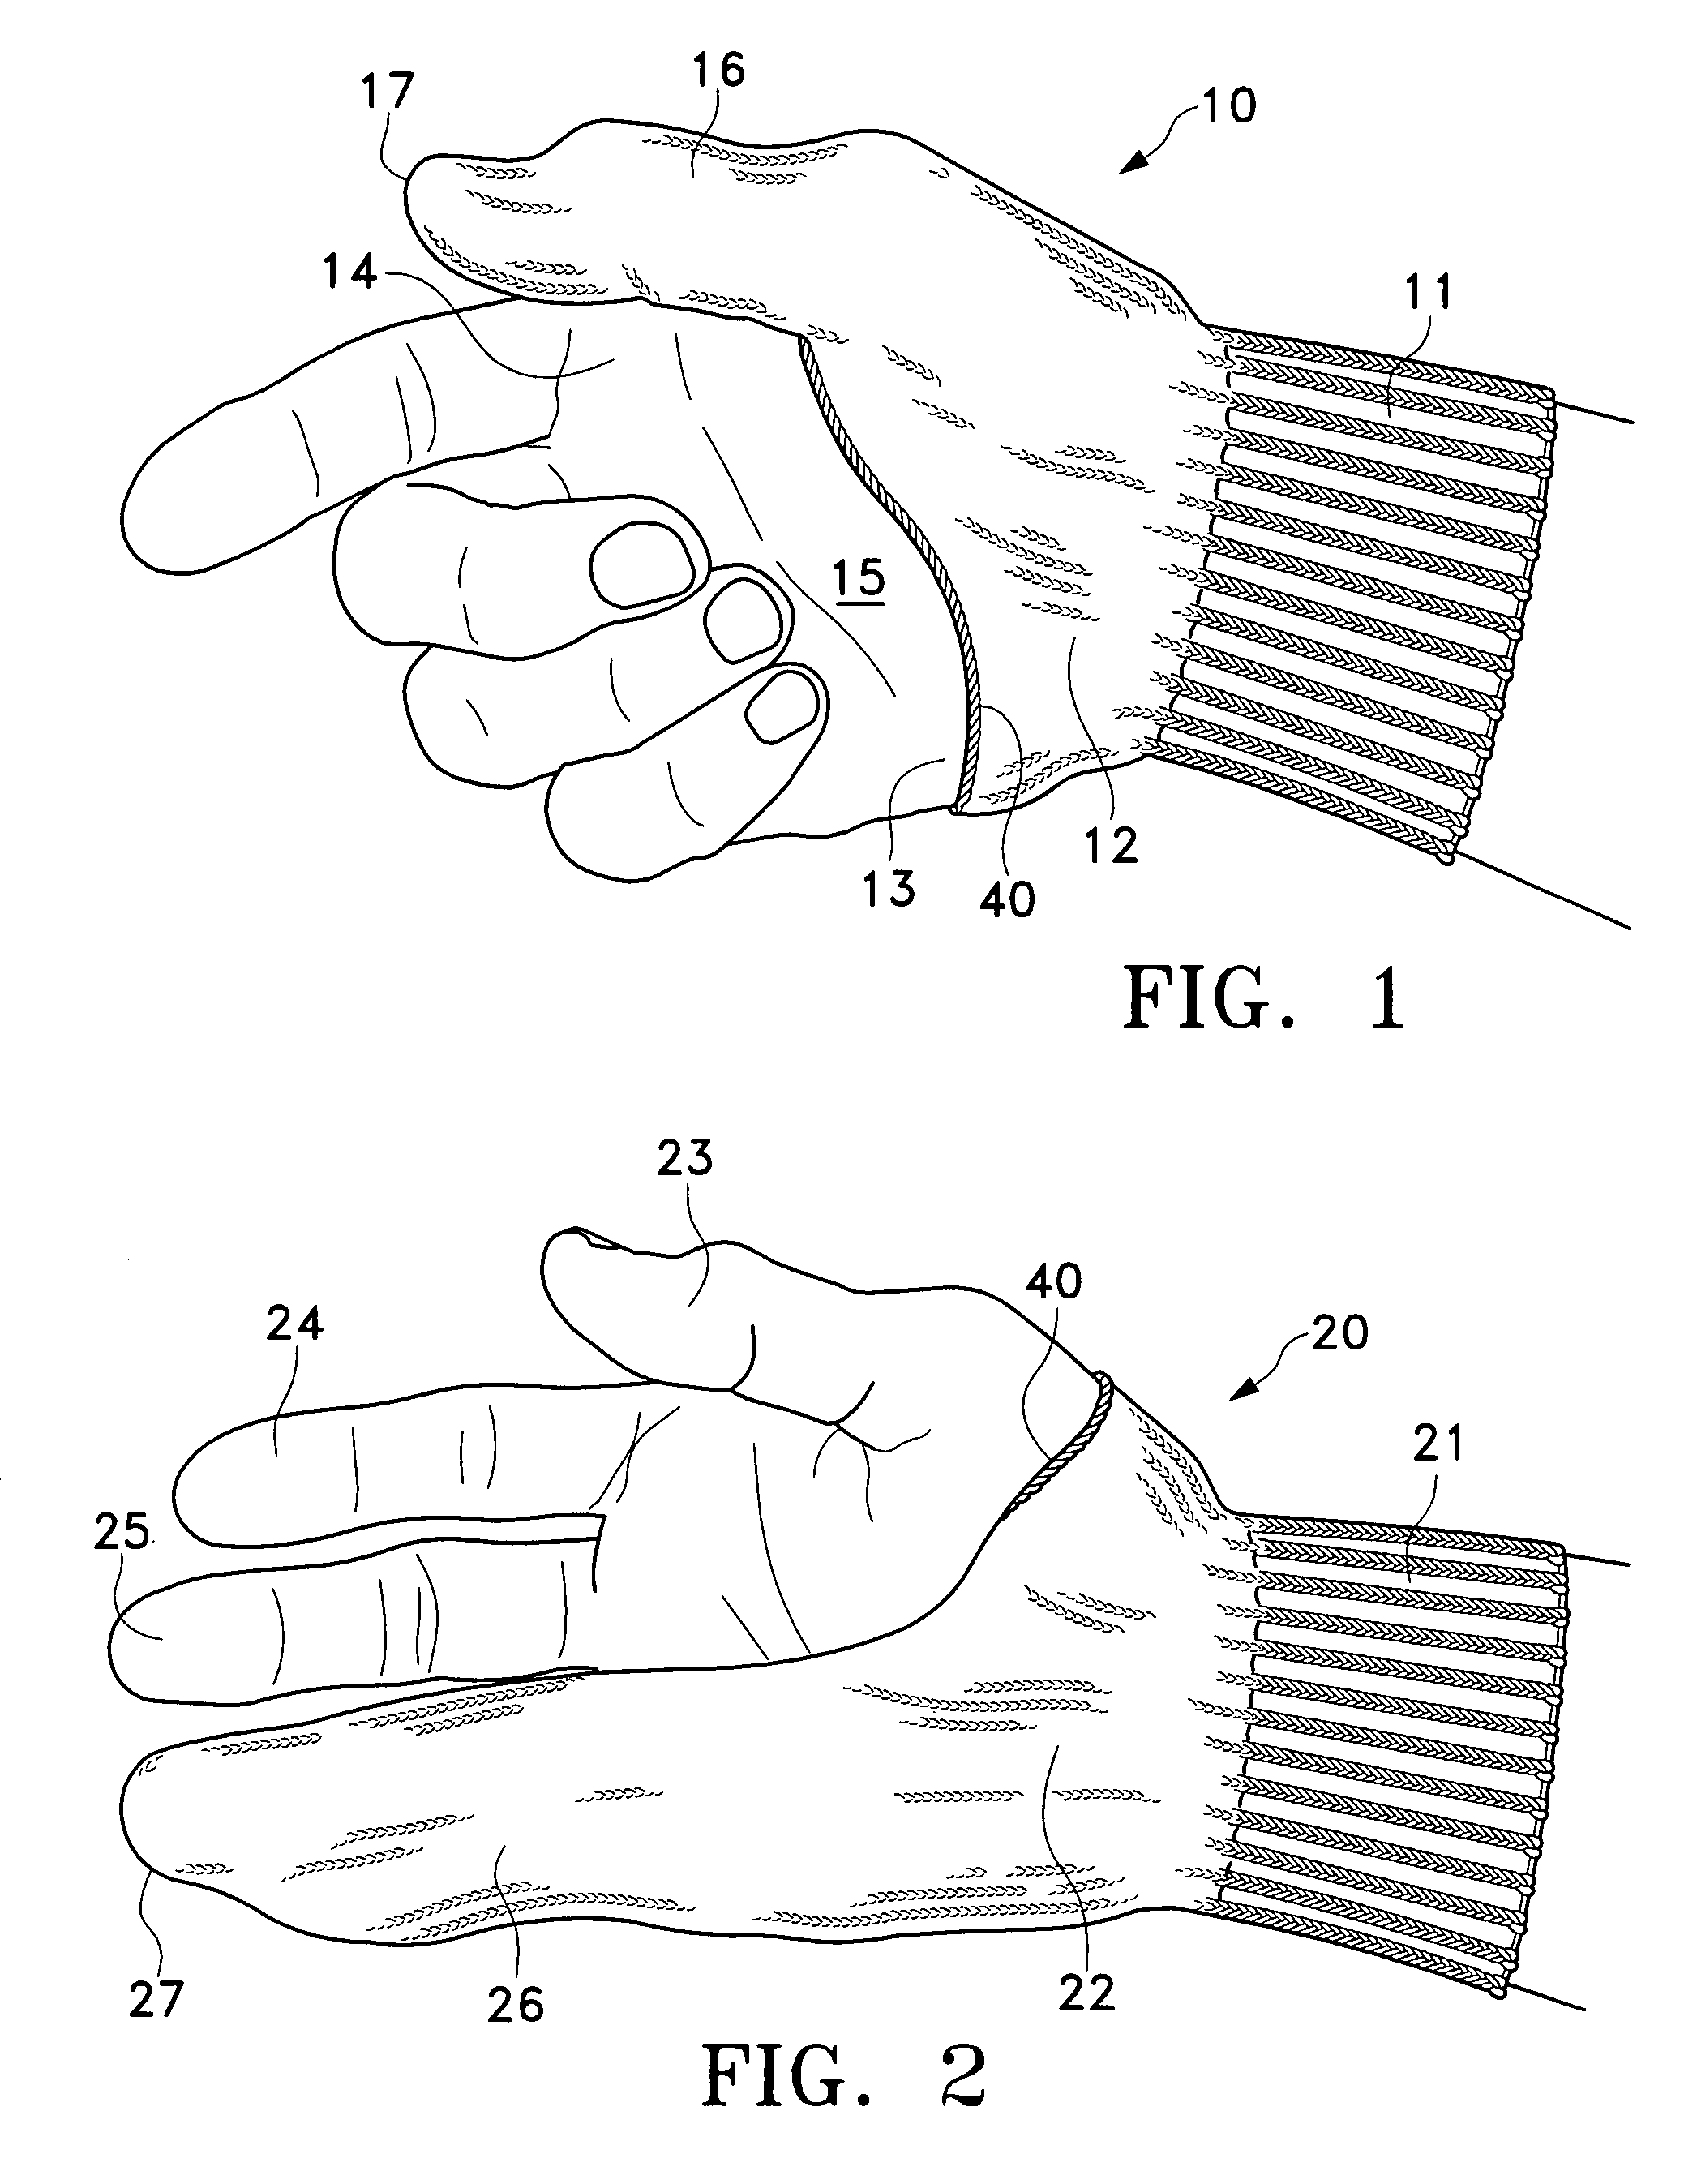 Finger sucking deterrent devise and method of use of same